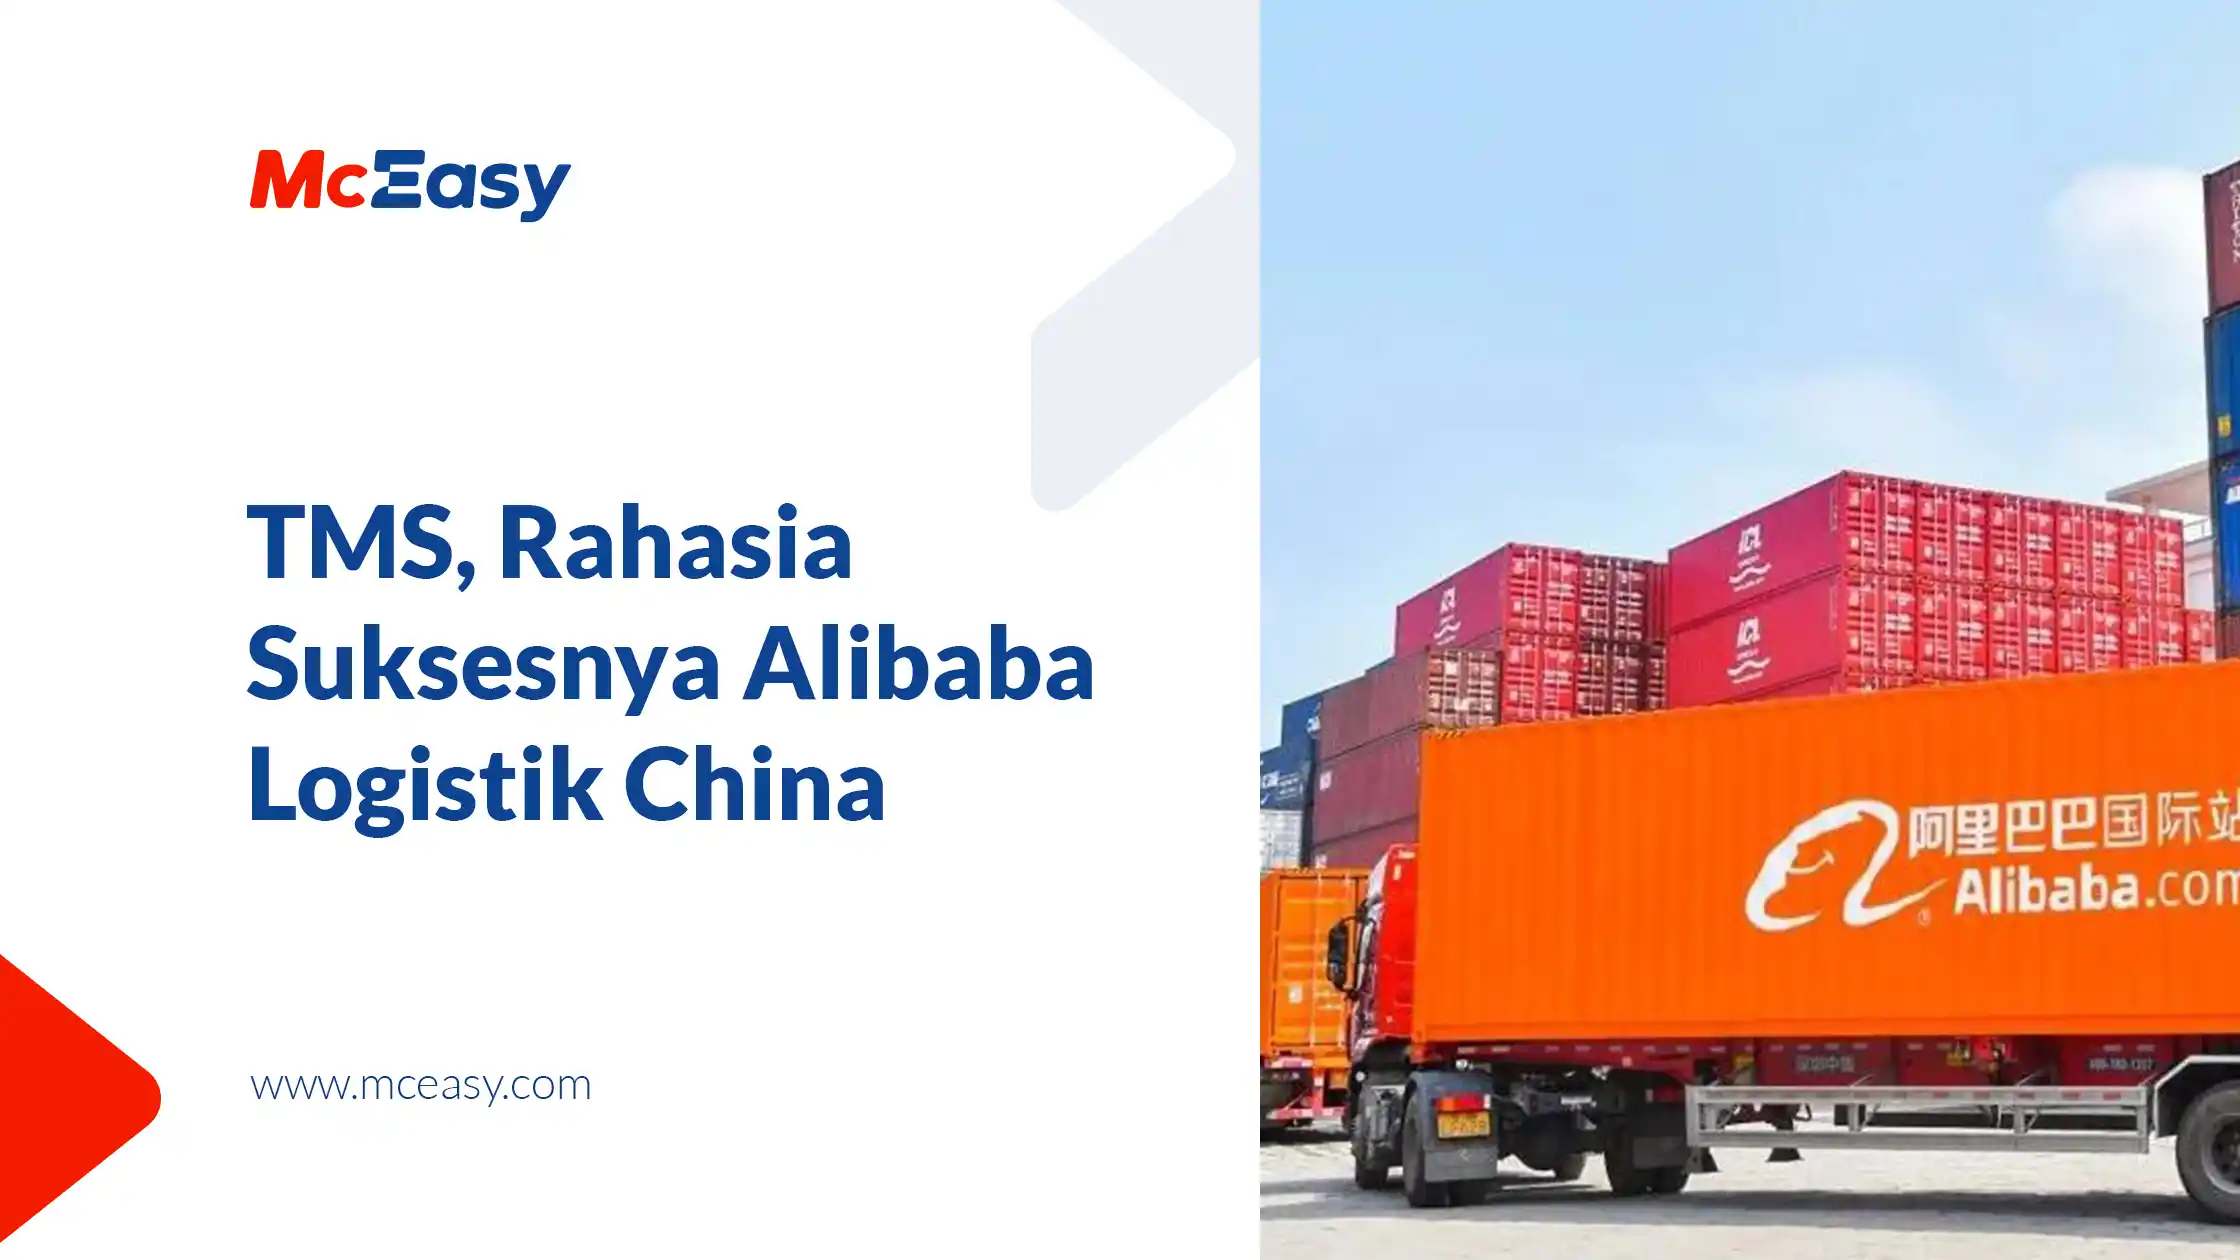 TMS, Rahasia Suksesnya Alibaba Logistik China